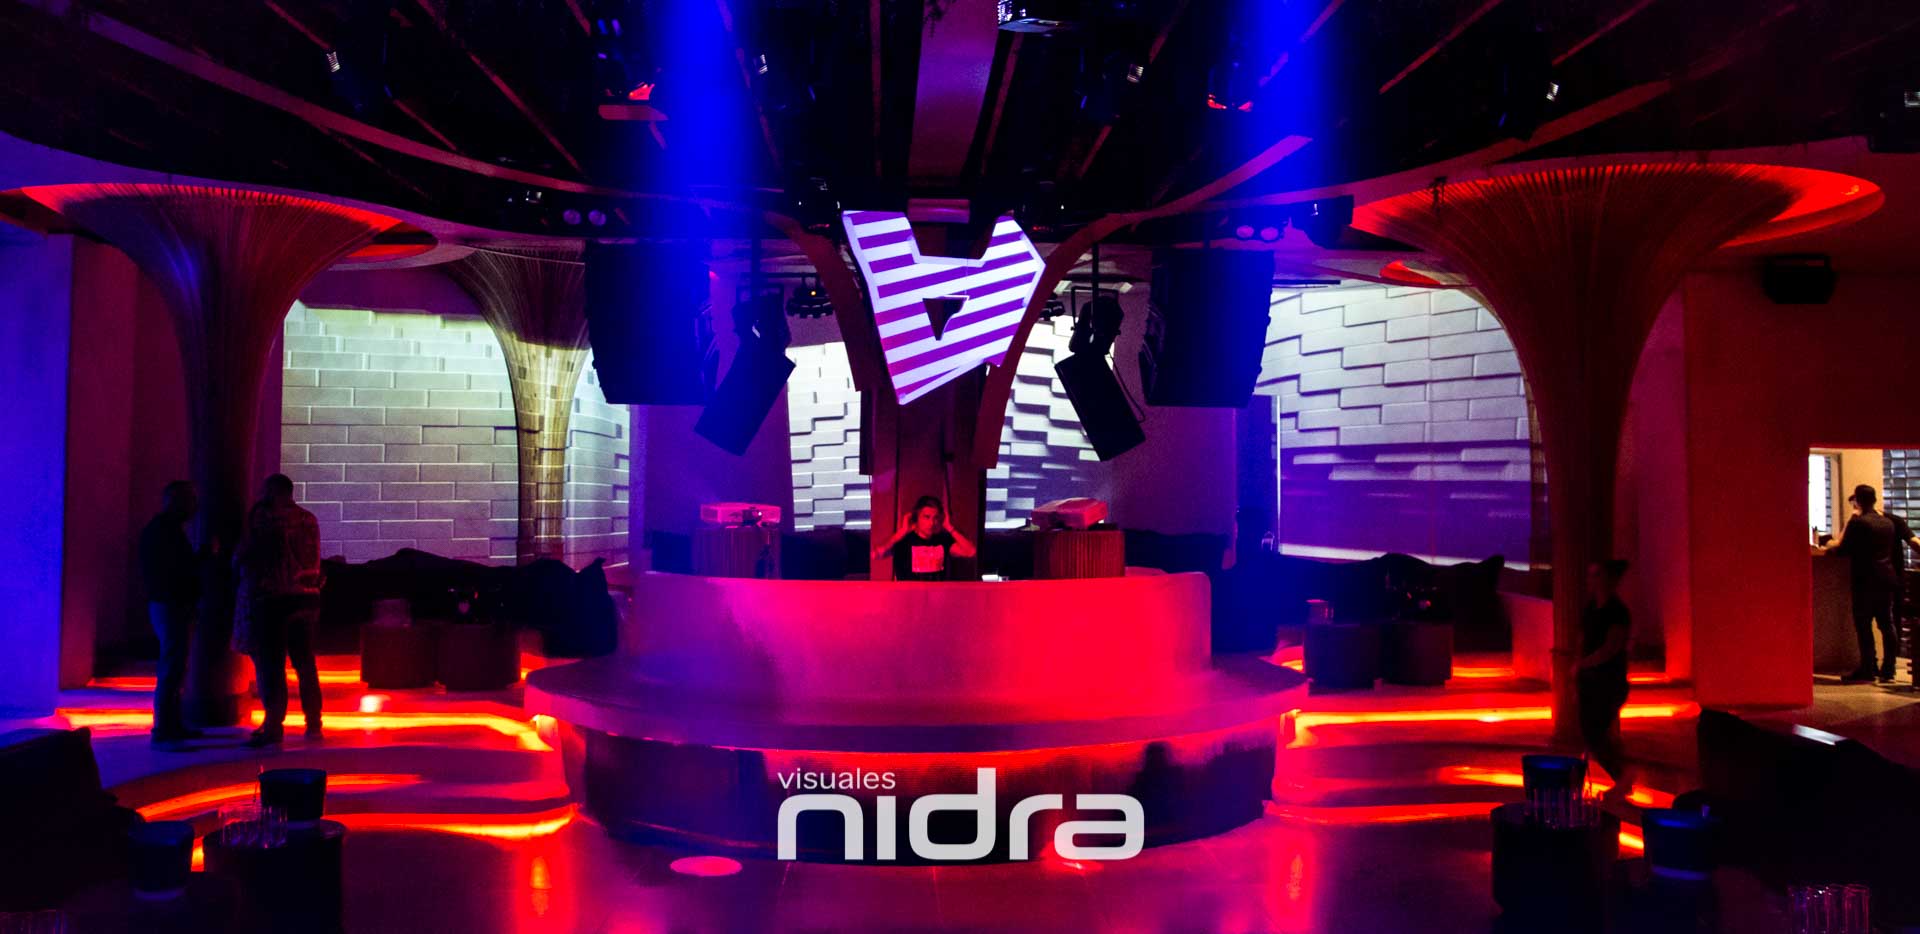 Visuales Nidra Nemaniax Video Mapping Momento Marbella DJ Luciano